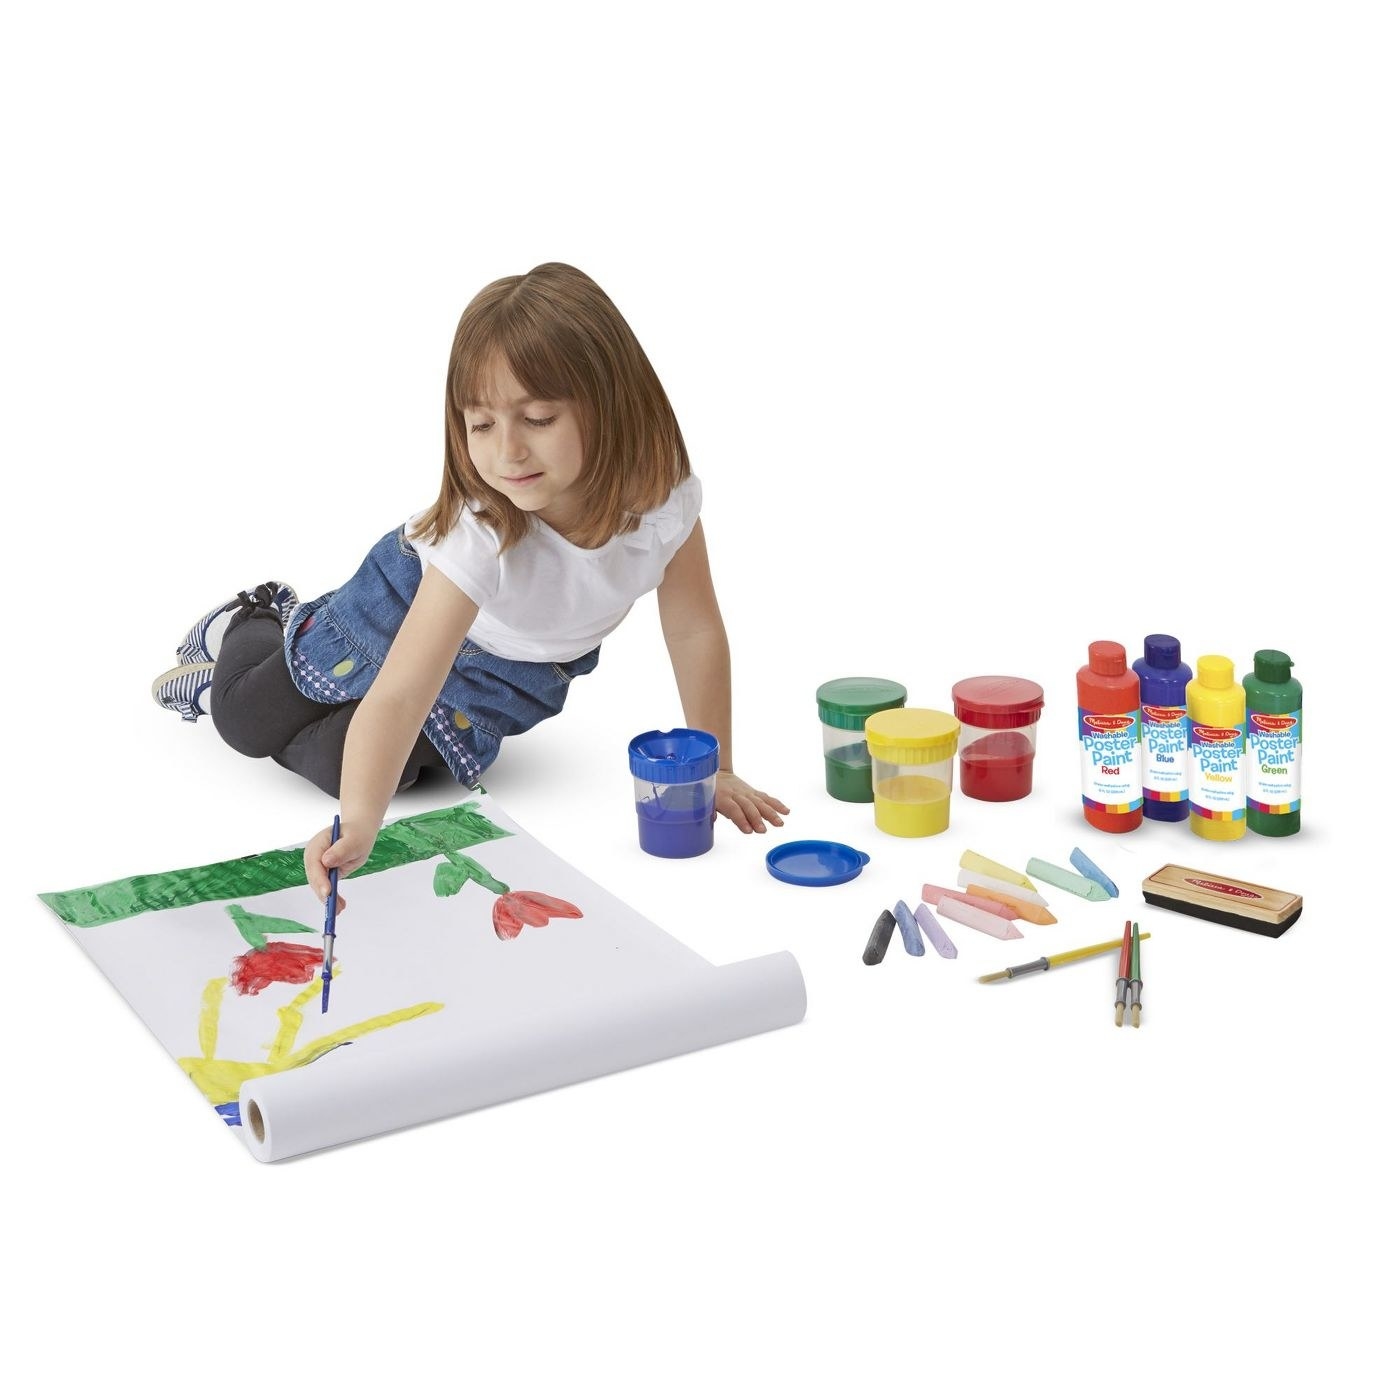 Child using paint set